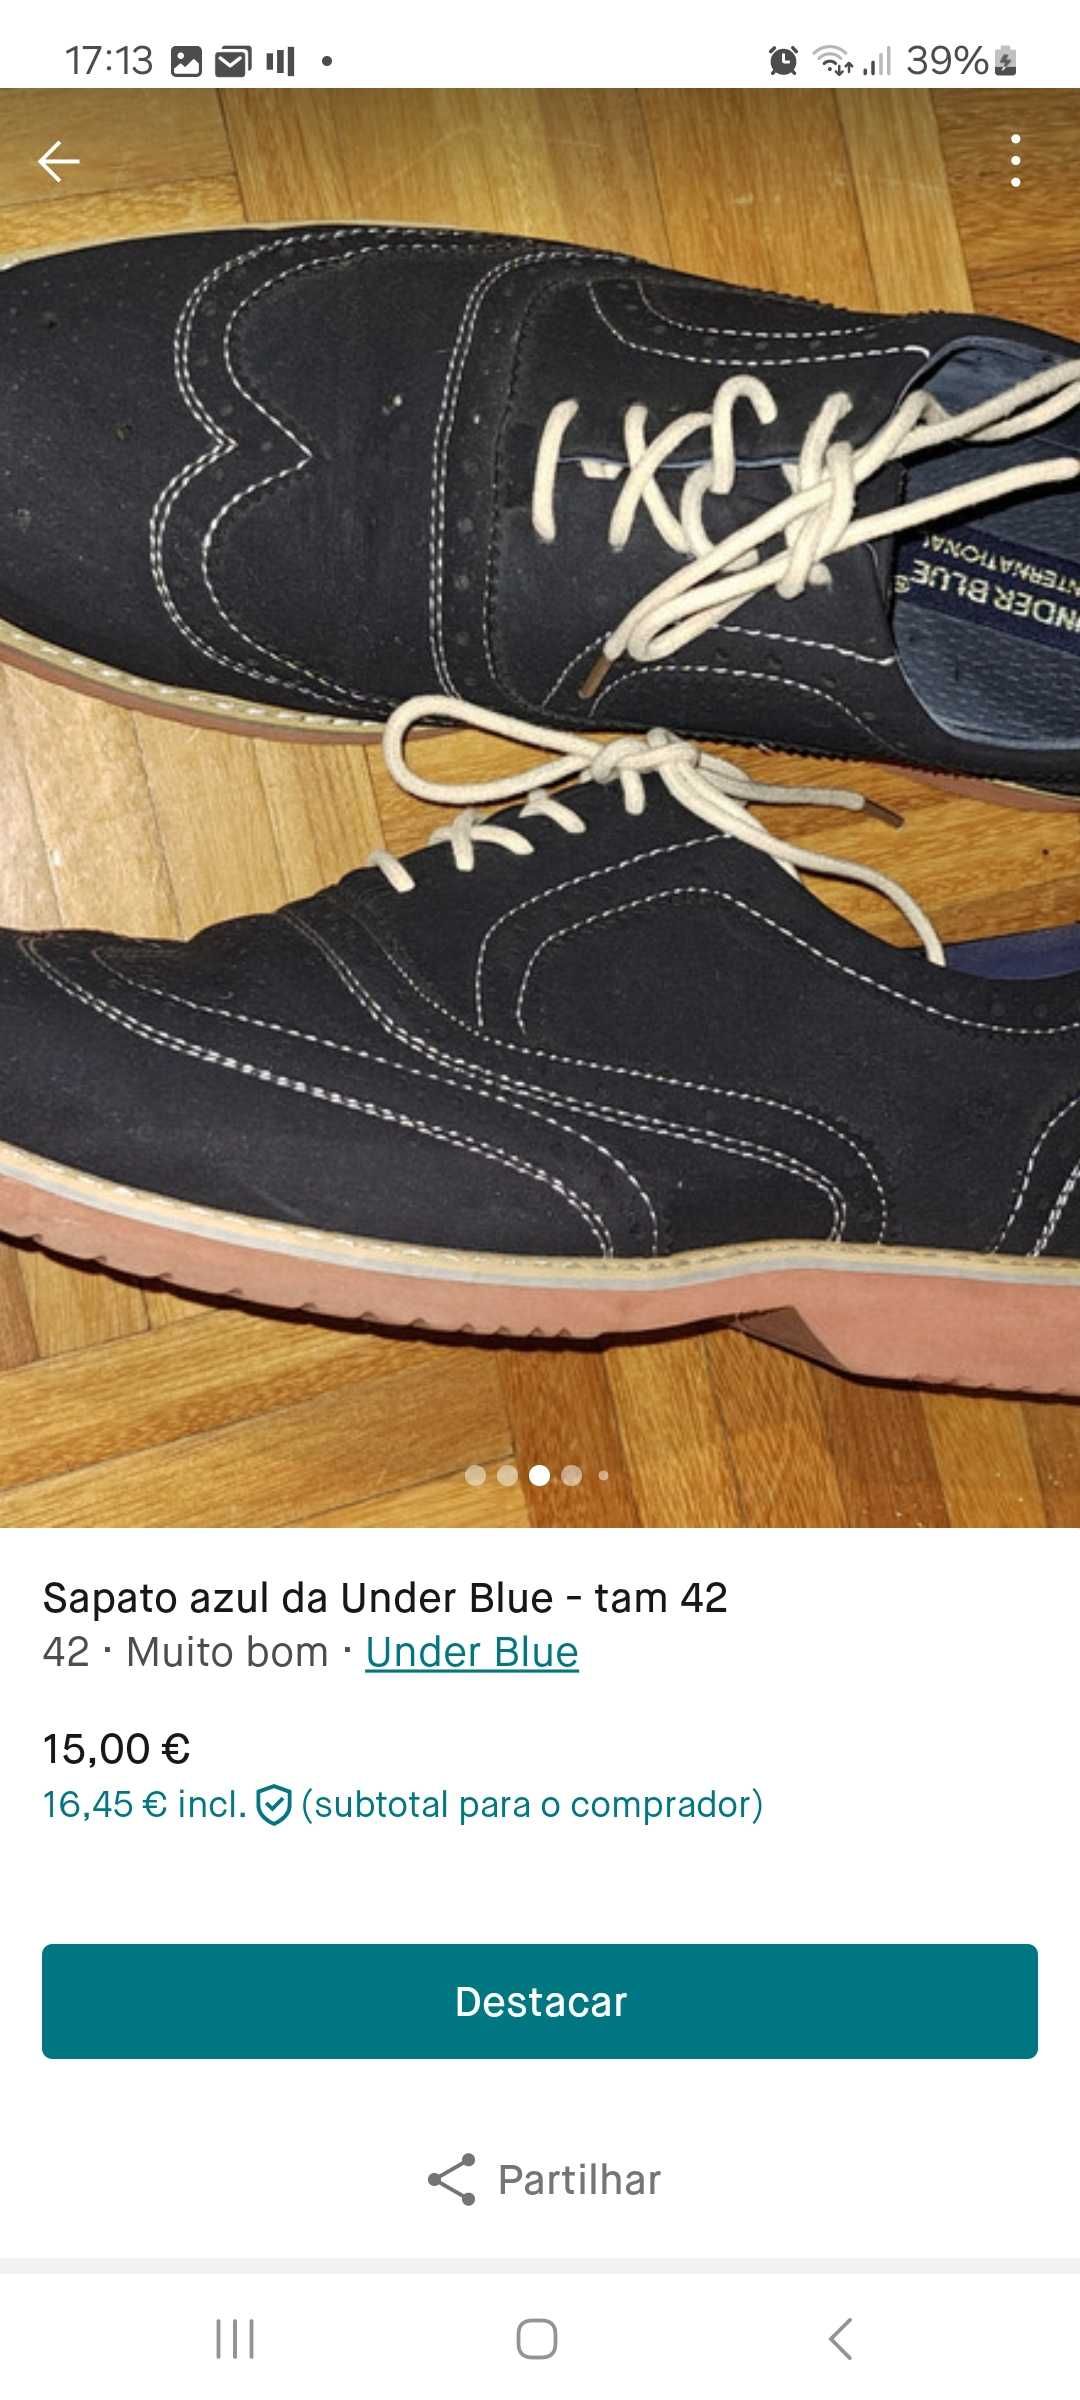 Sapato Underblue azul marinho tam 42